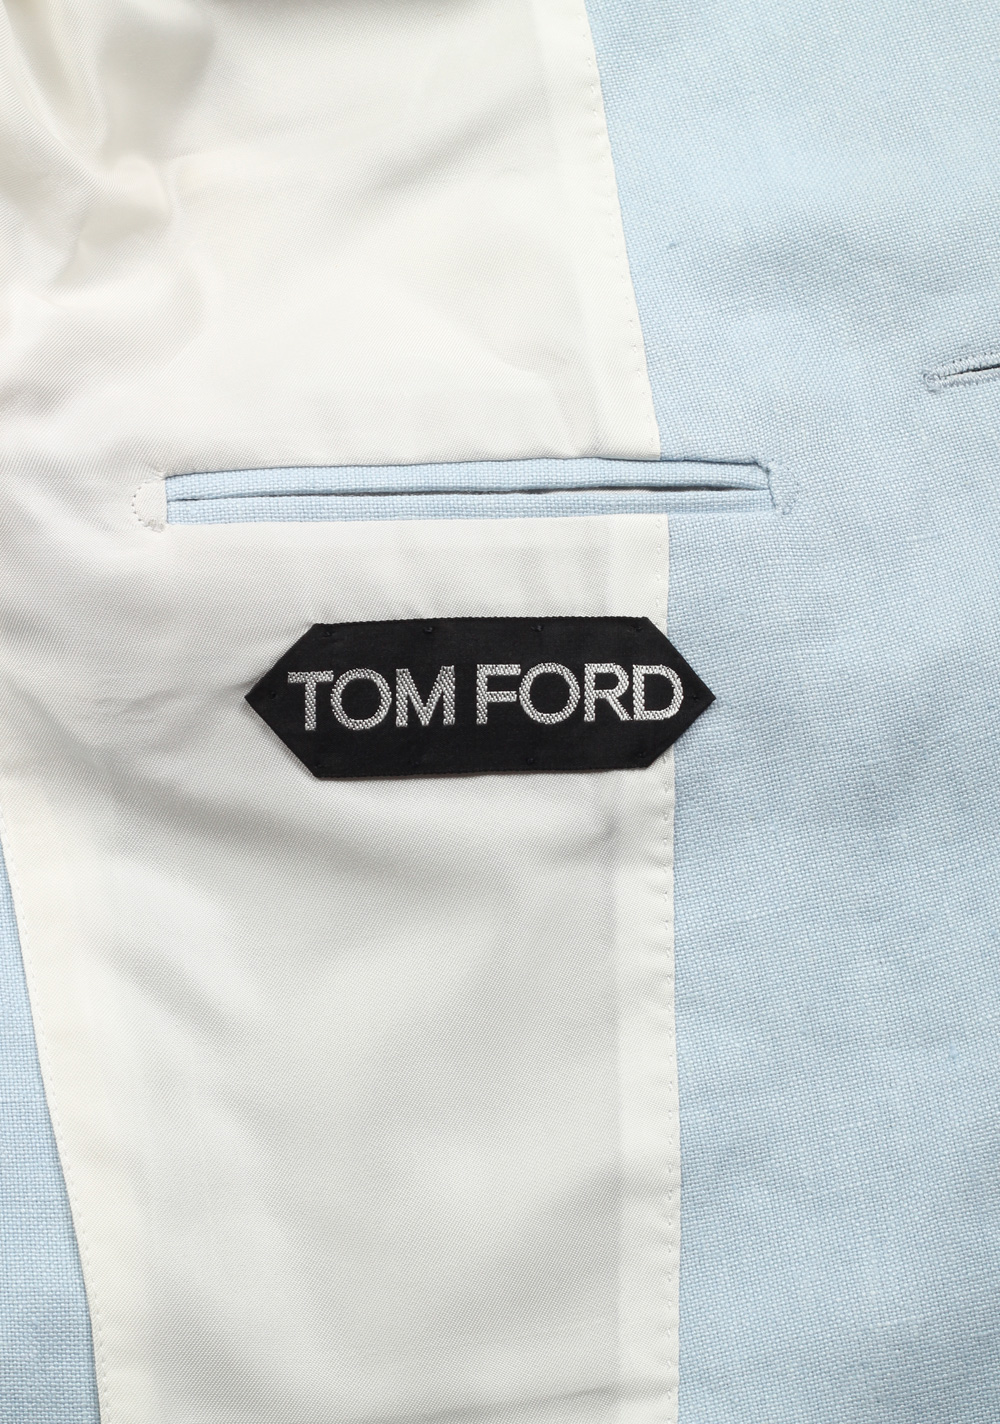 TOM FORD Shelton Blue Sport Coat Size 48 / 38R U.S. In Linen | Costume Limité